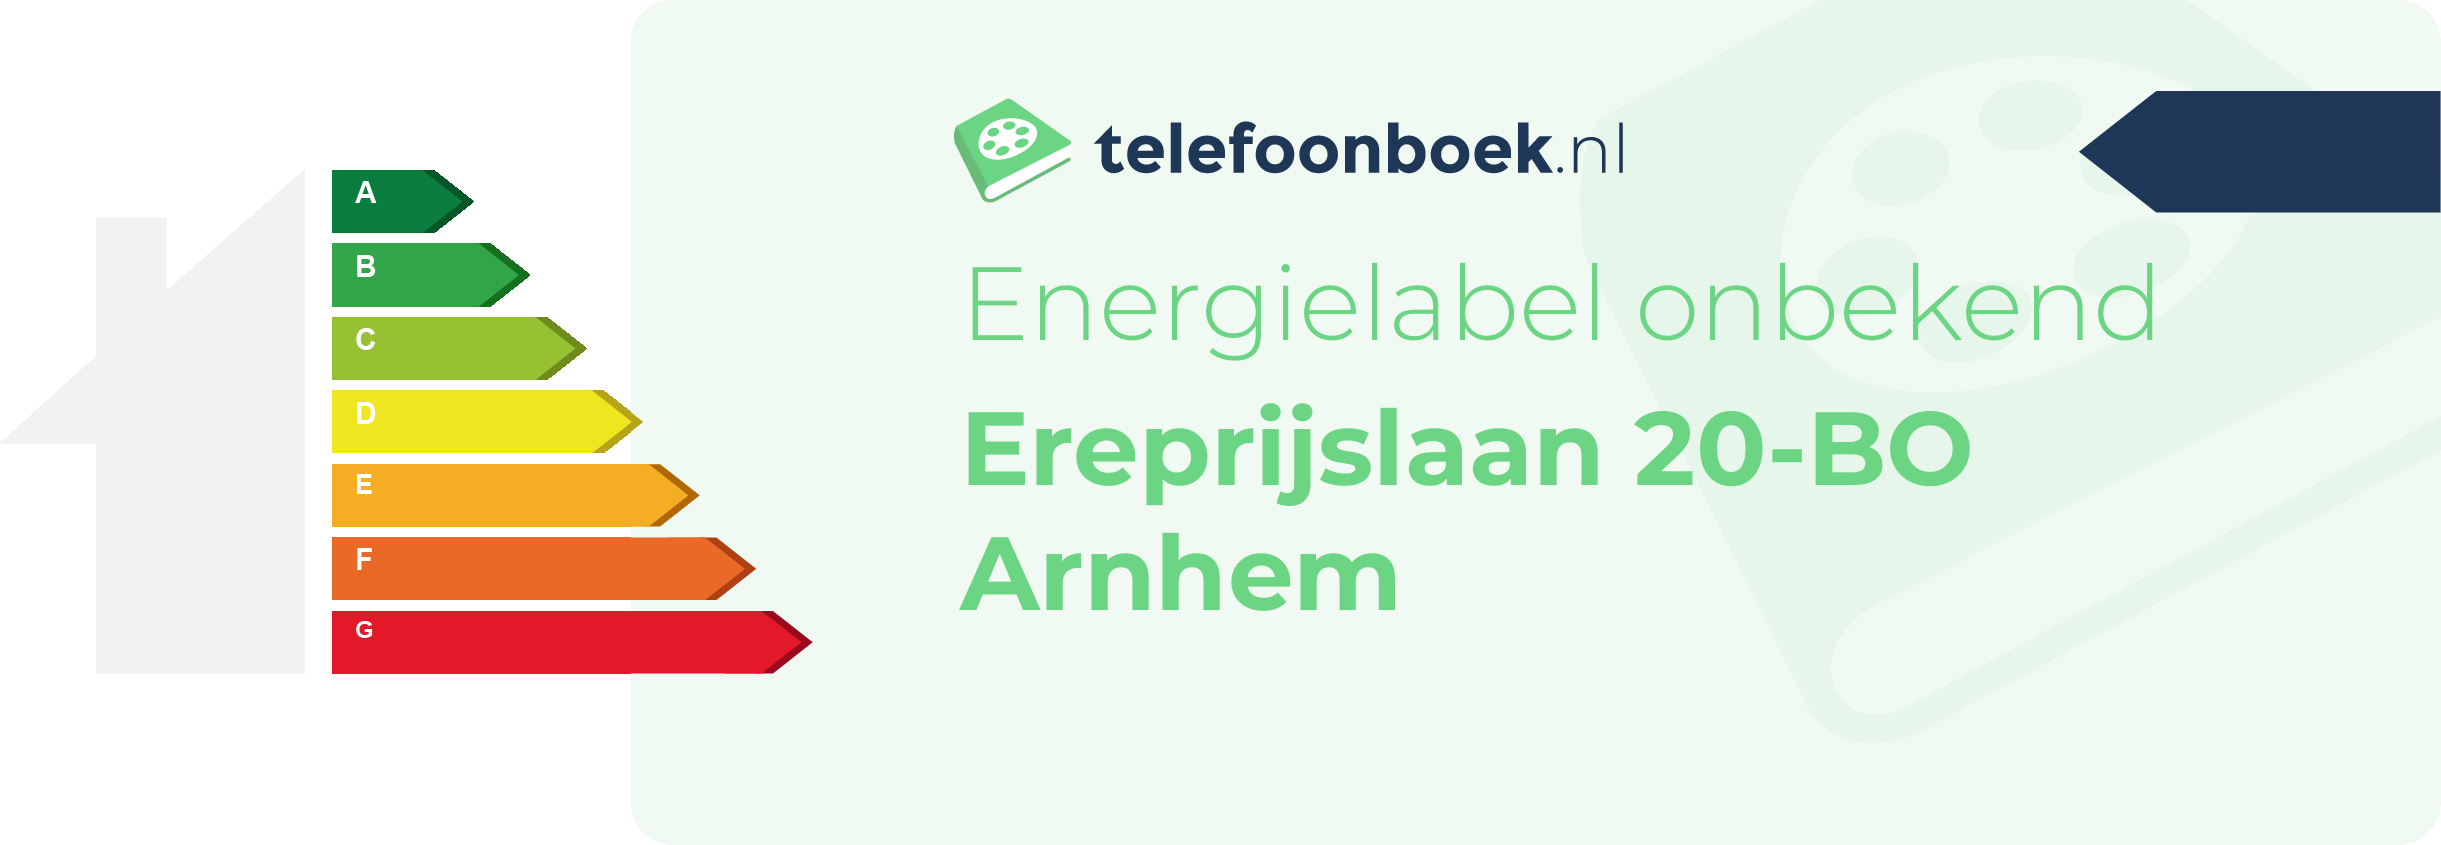 Energielabel Ereprijslaan 20-BO Arnhem